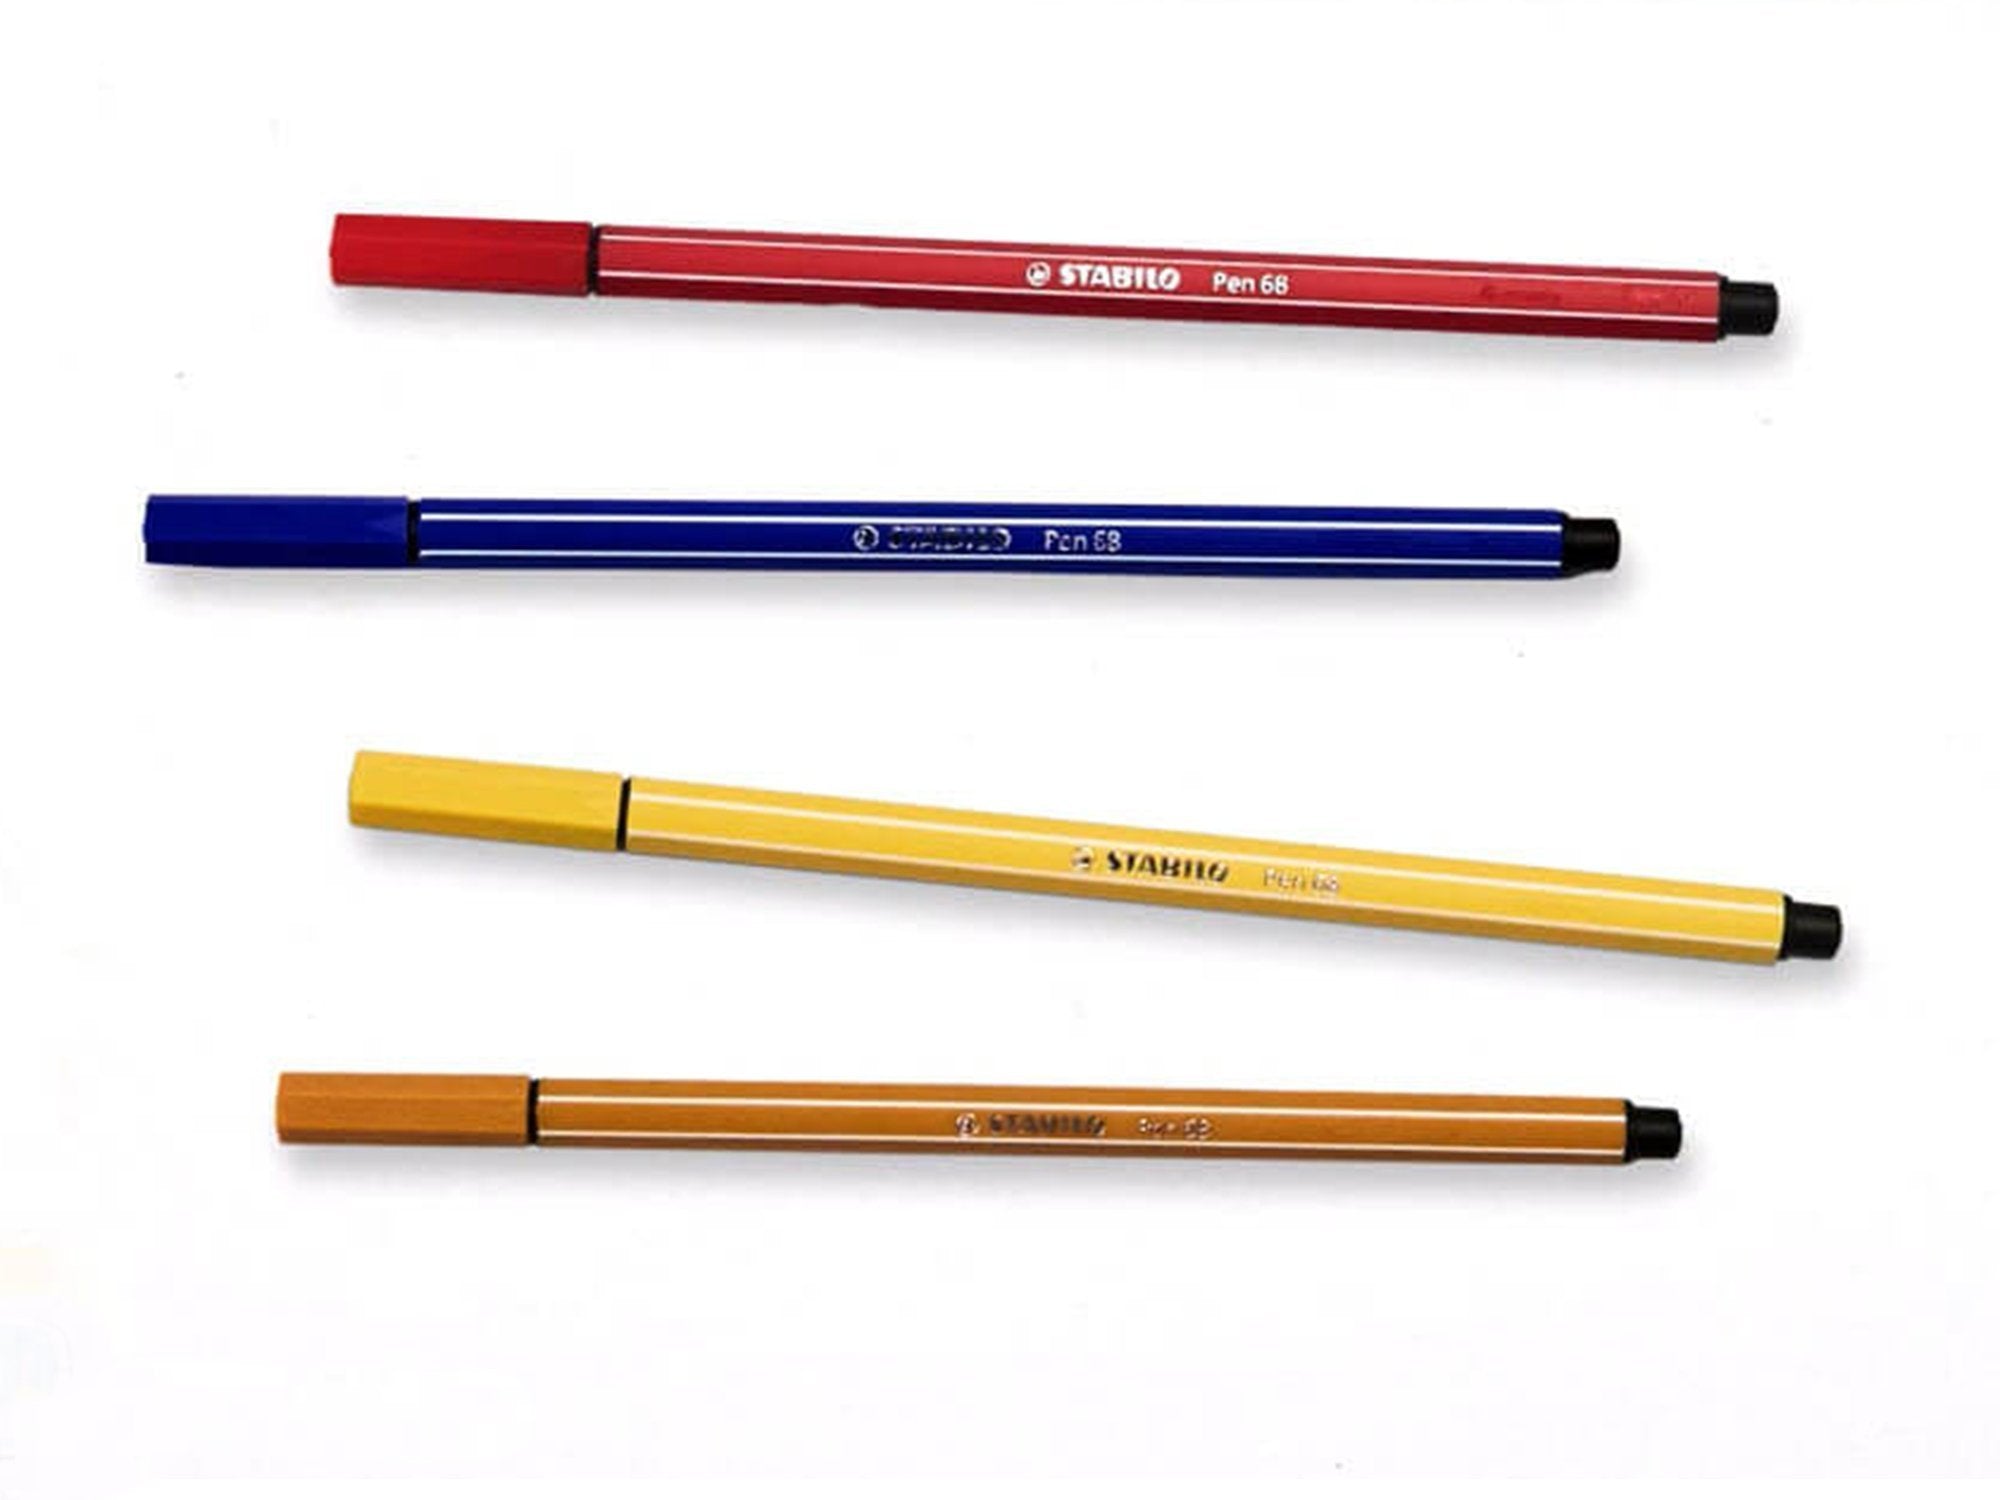 Stabilo Fine Point Colored Pen Set - Stabilo Pens